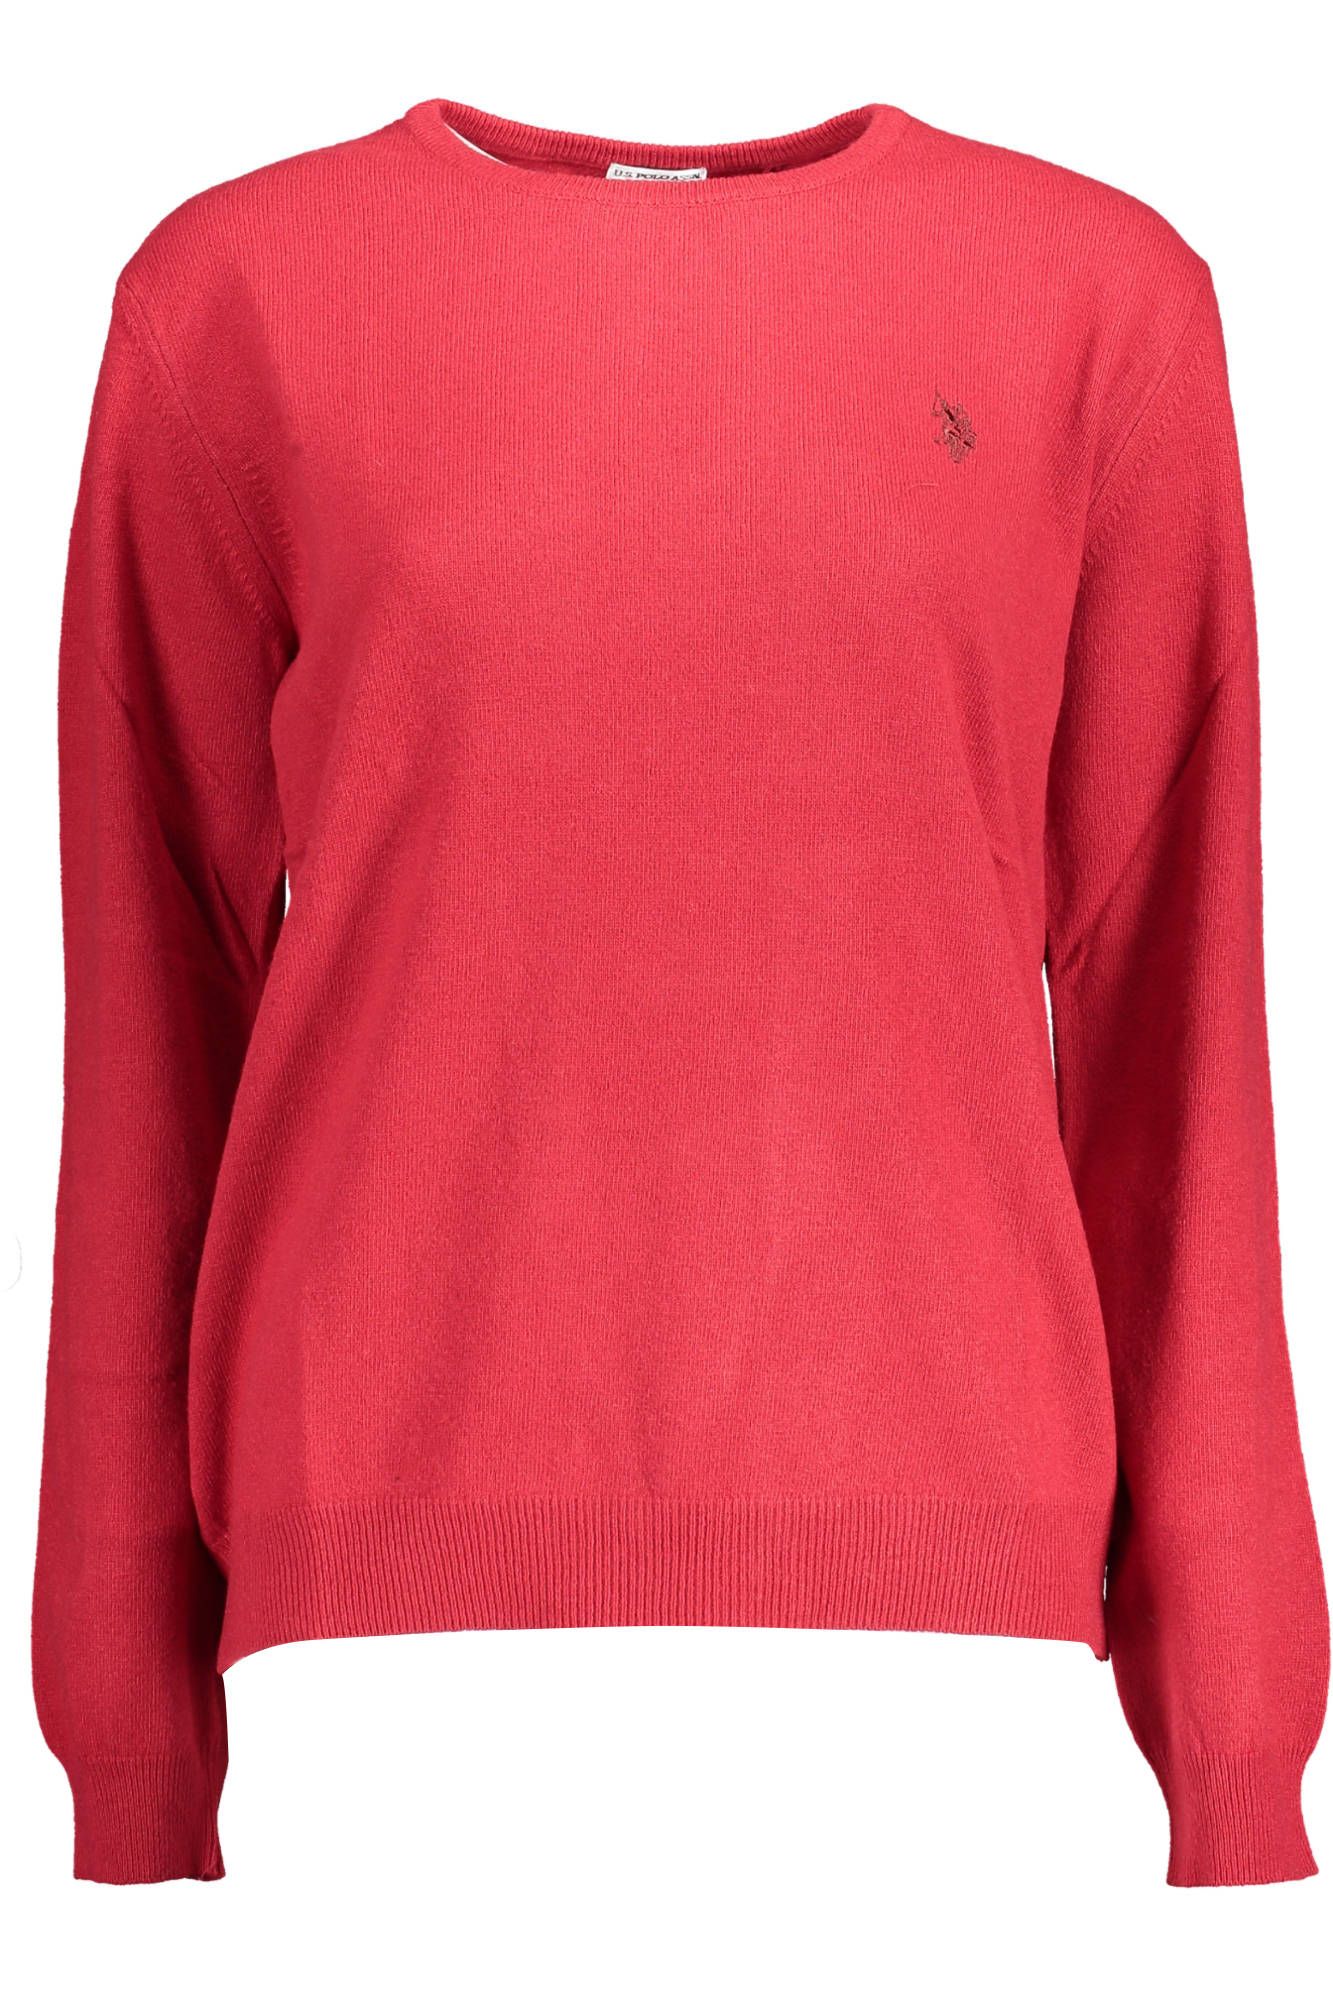 U.S. Polo Assn. Pink Wool Sweater